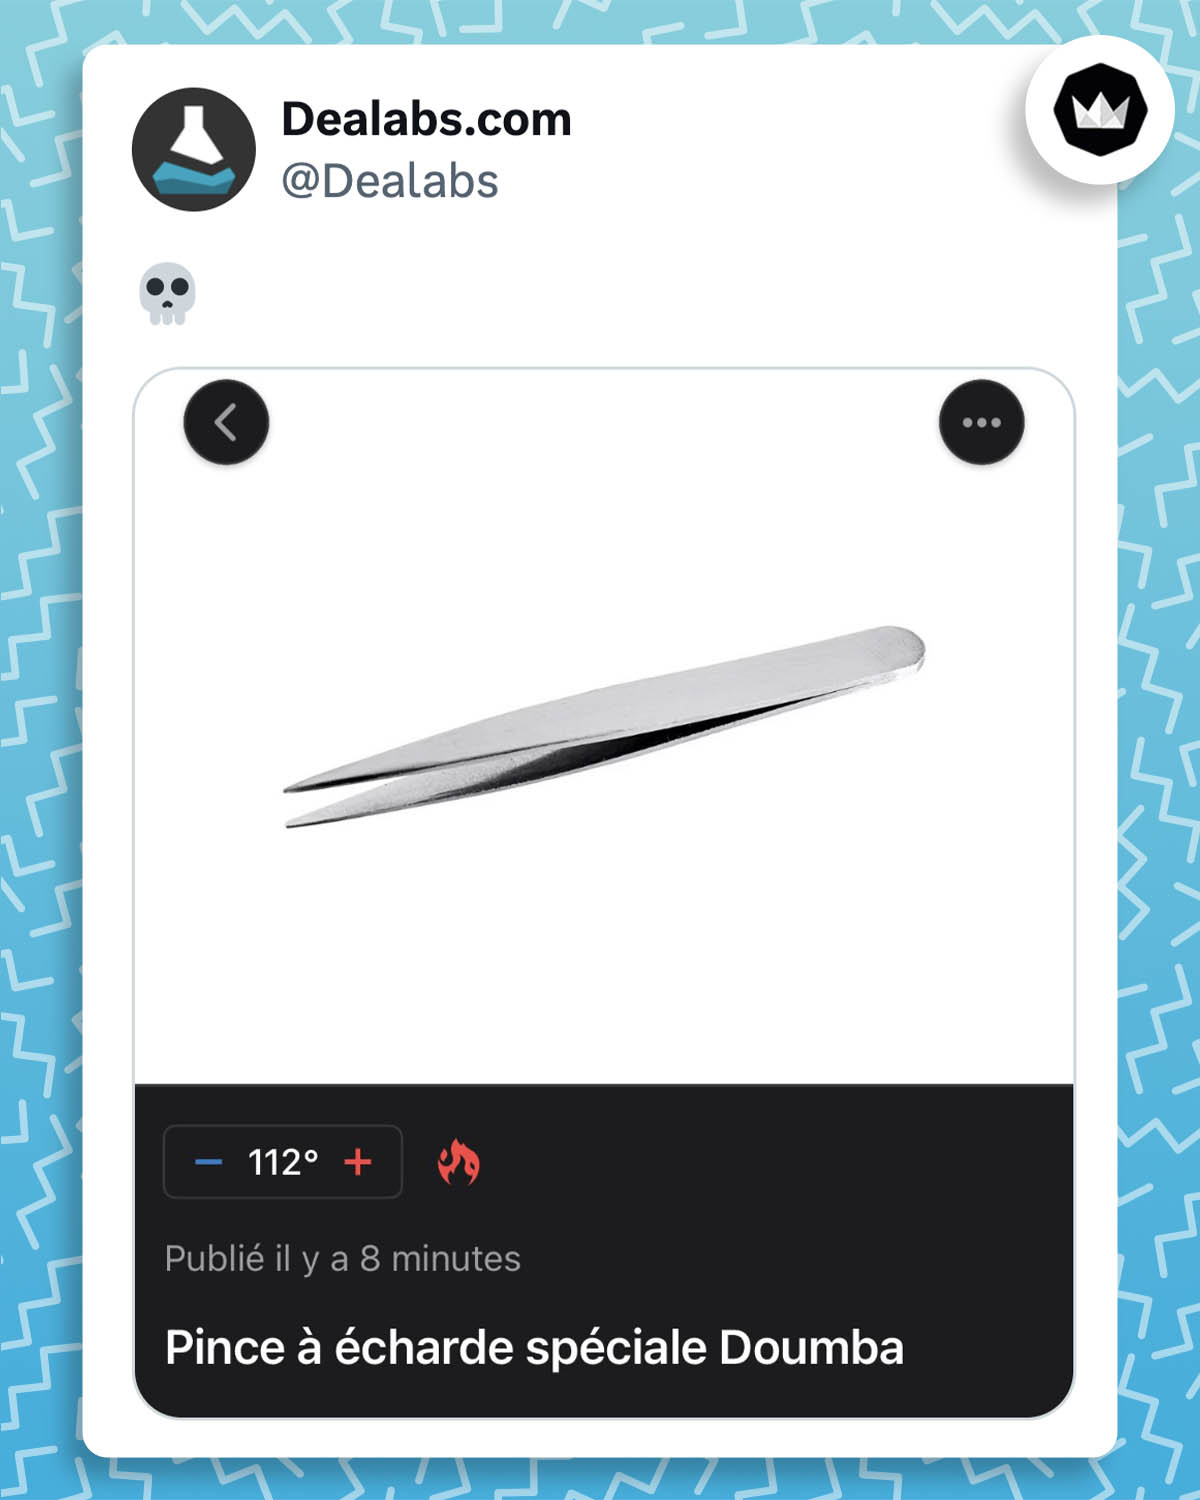 Tweet de Dealabs avec le screen d'une pince à écharde avec la légende : "Pince à écharde spéciale Doumba"